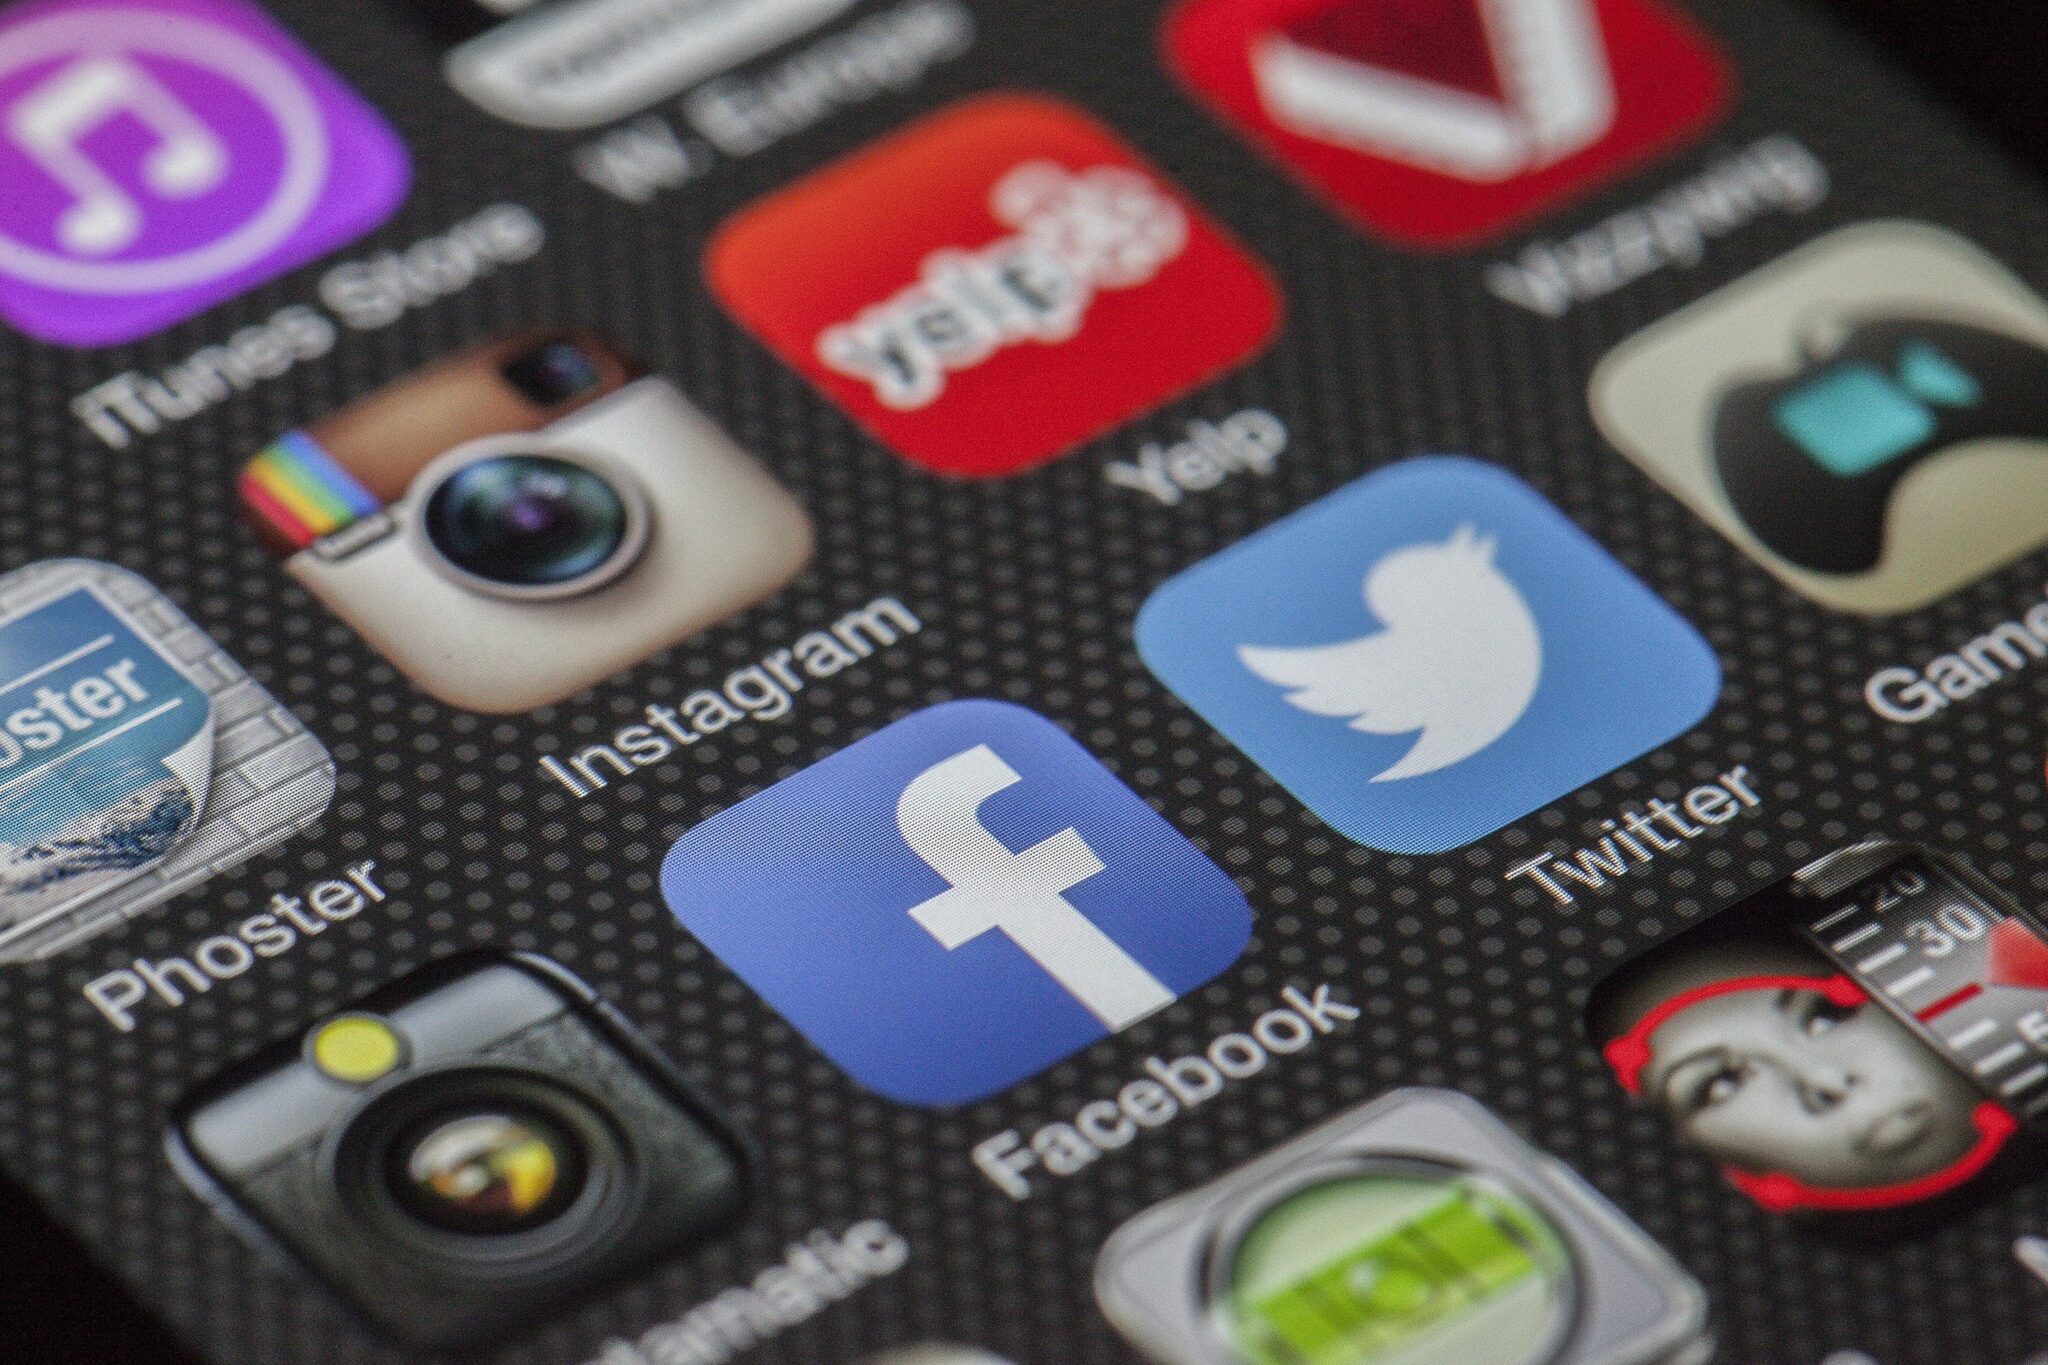 A smartphone's screen displays different social media applications.